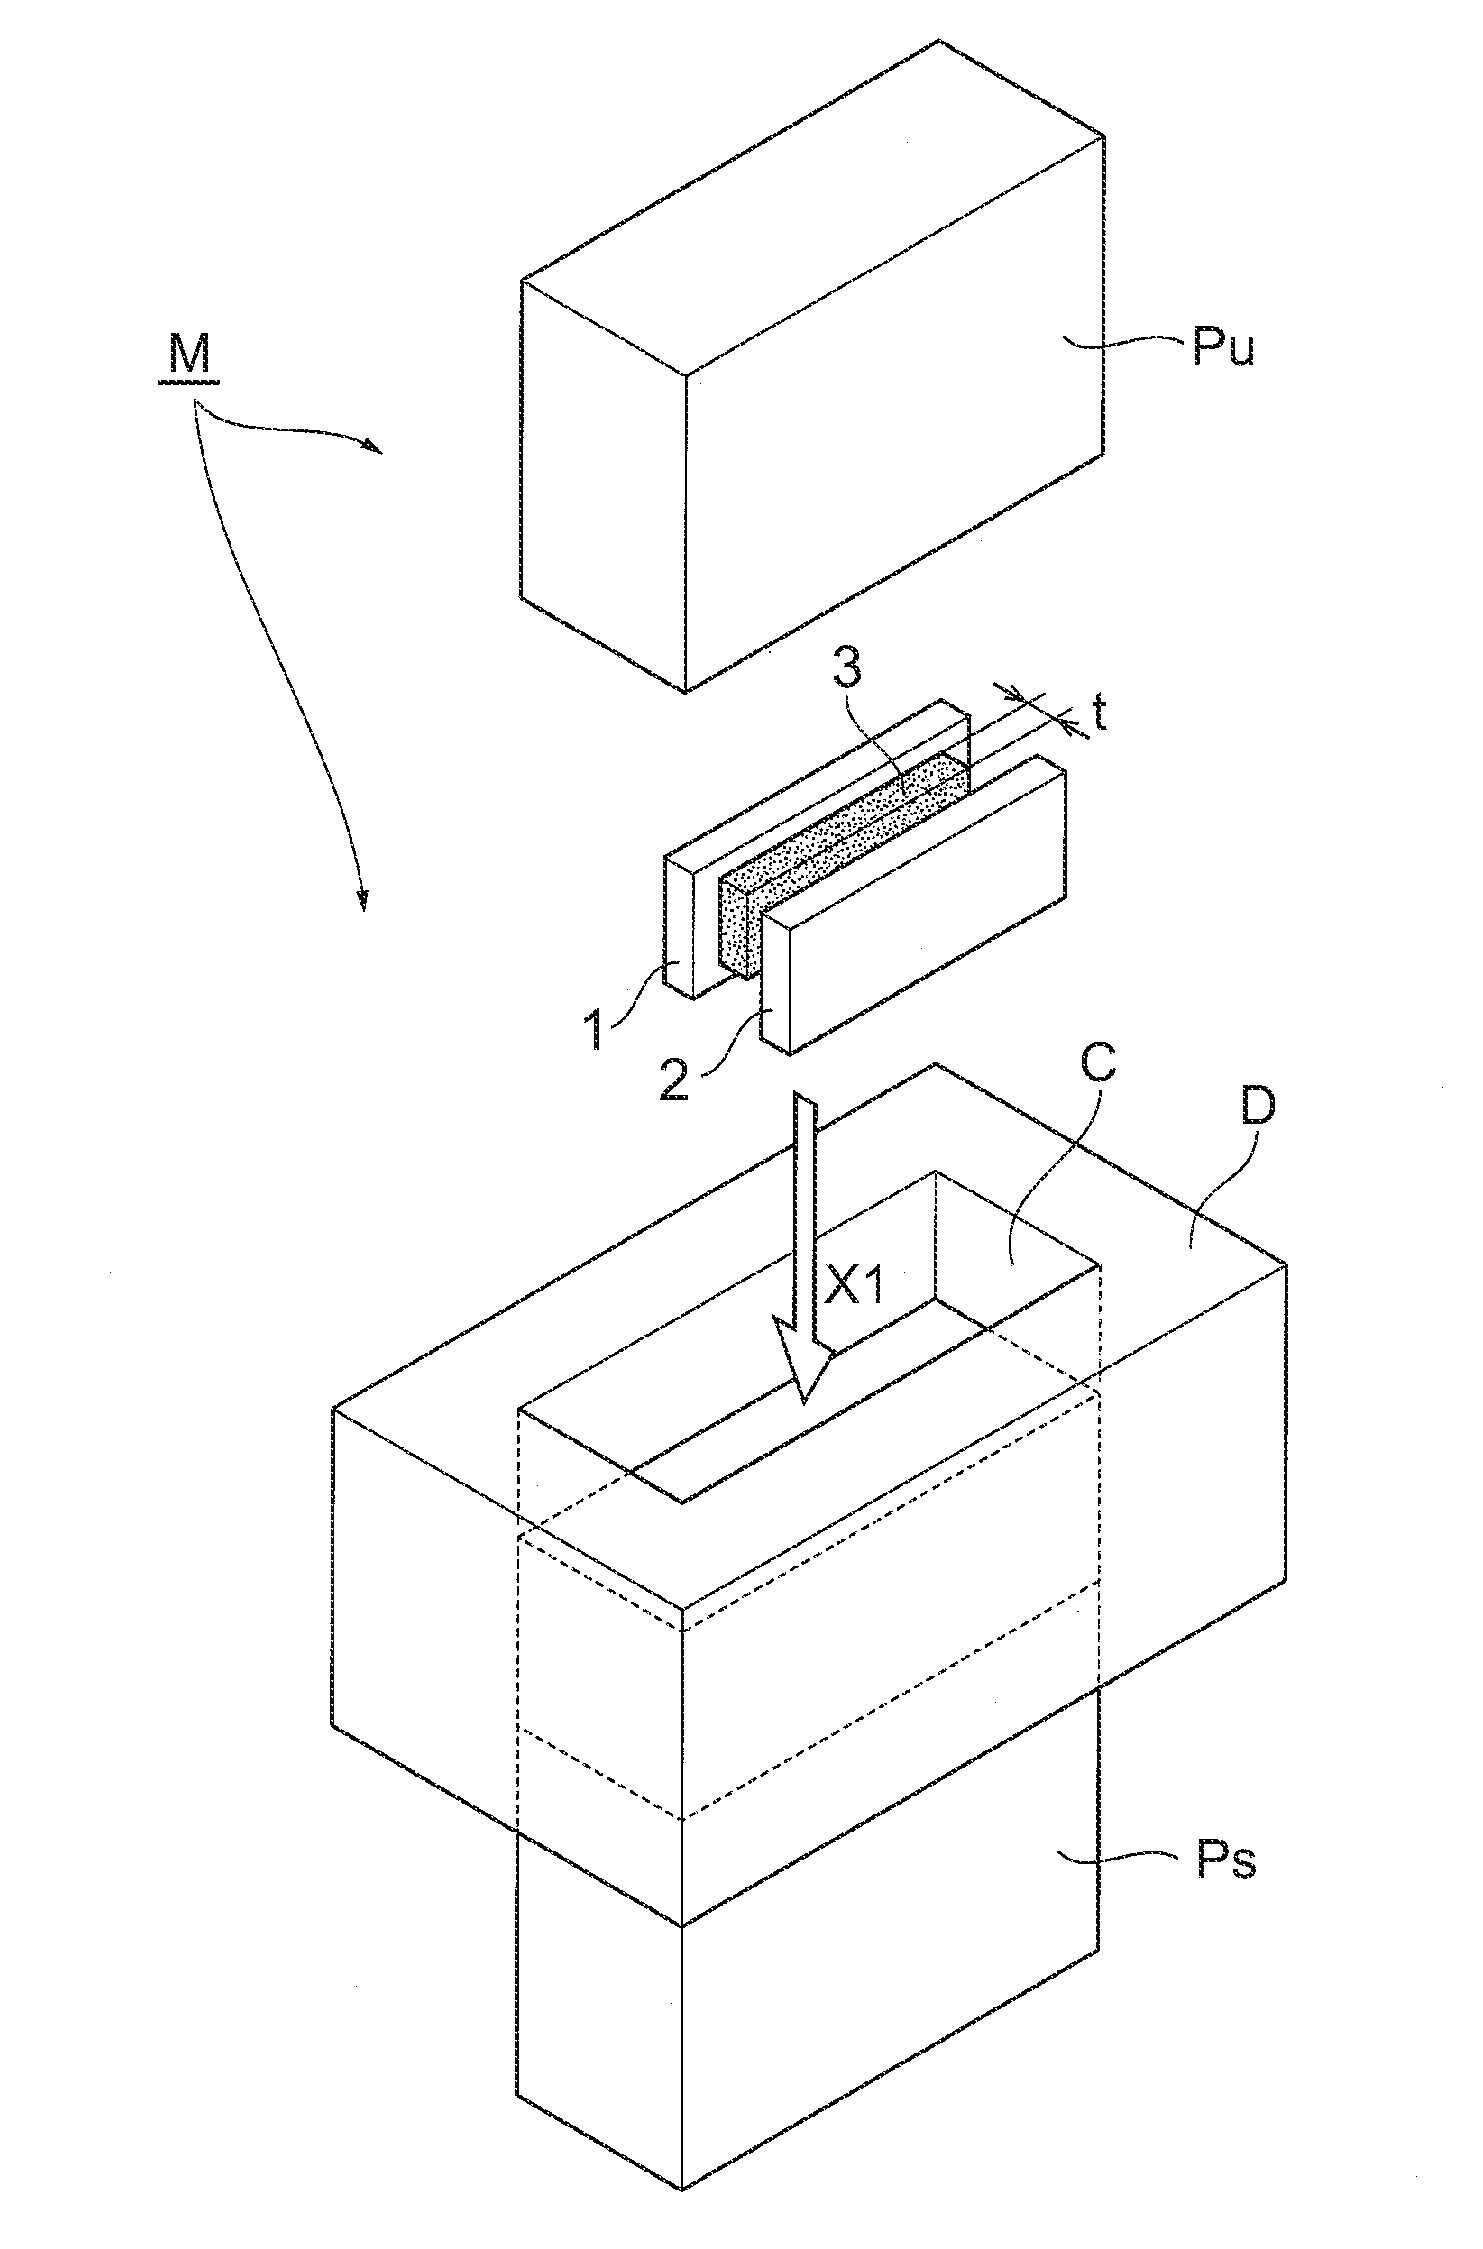 Rotor production method